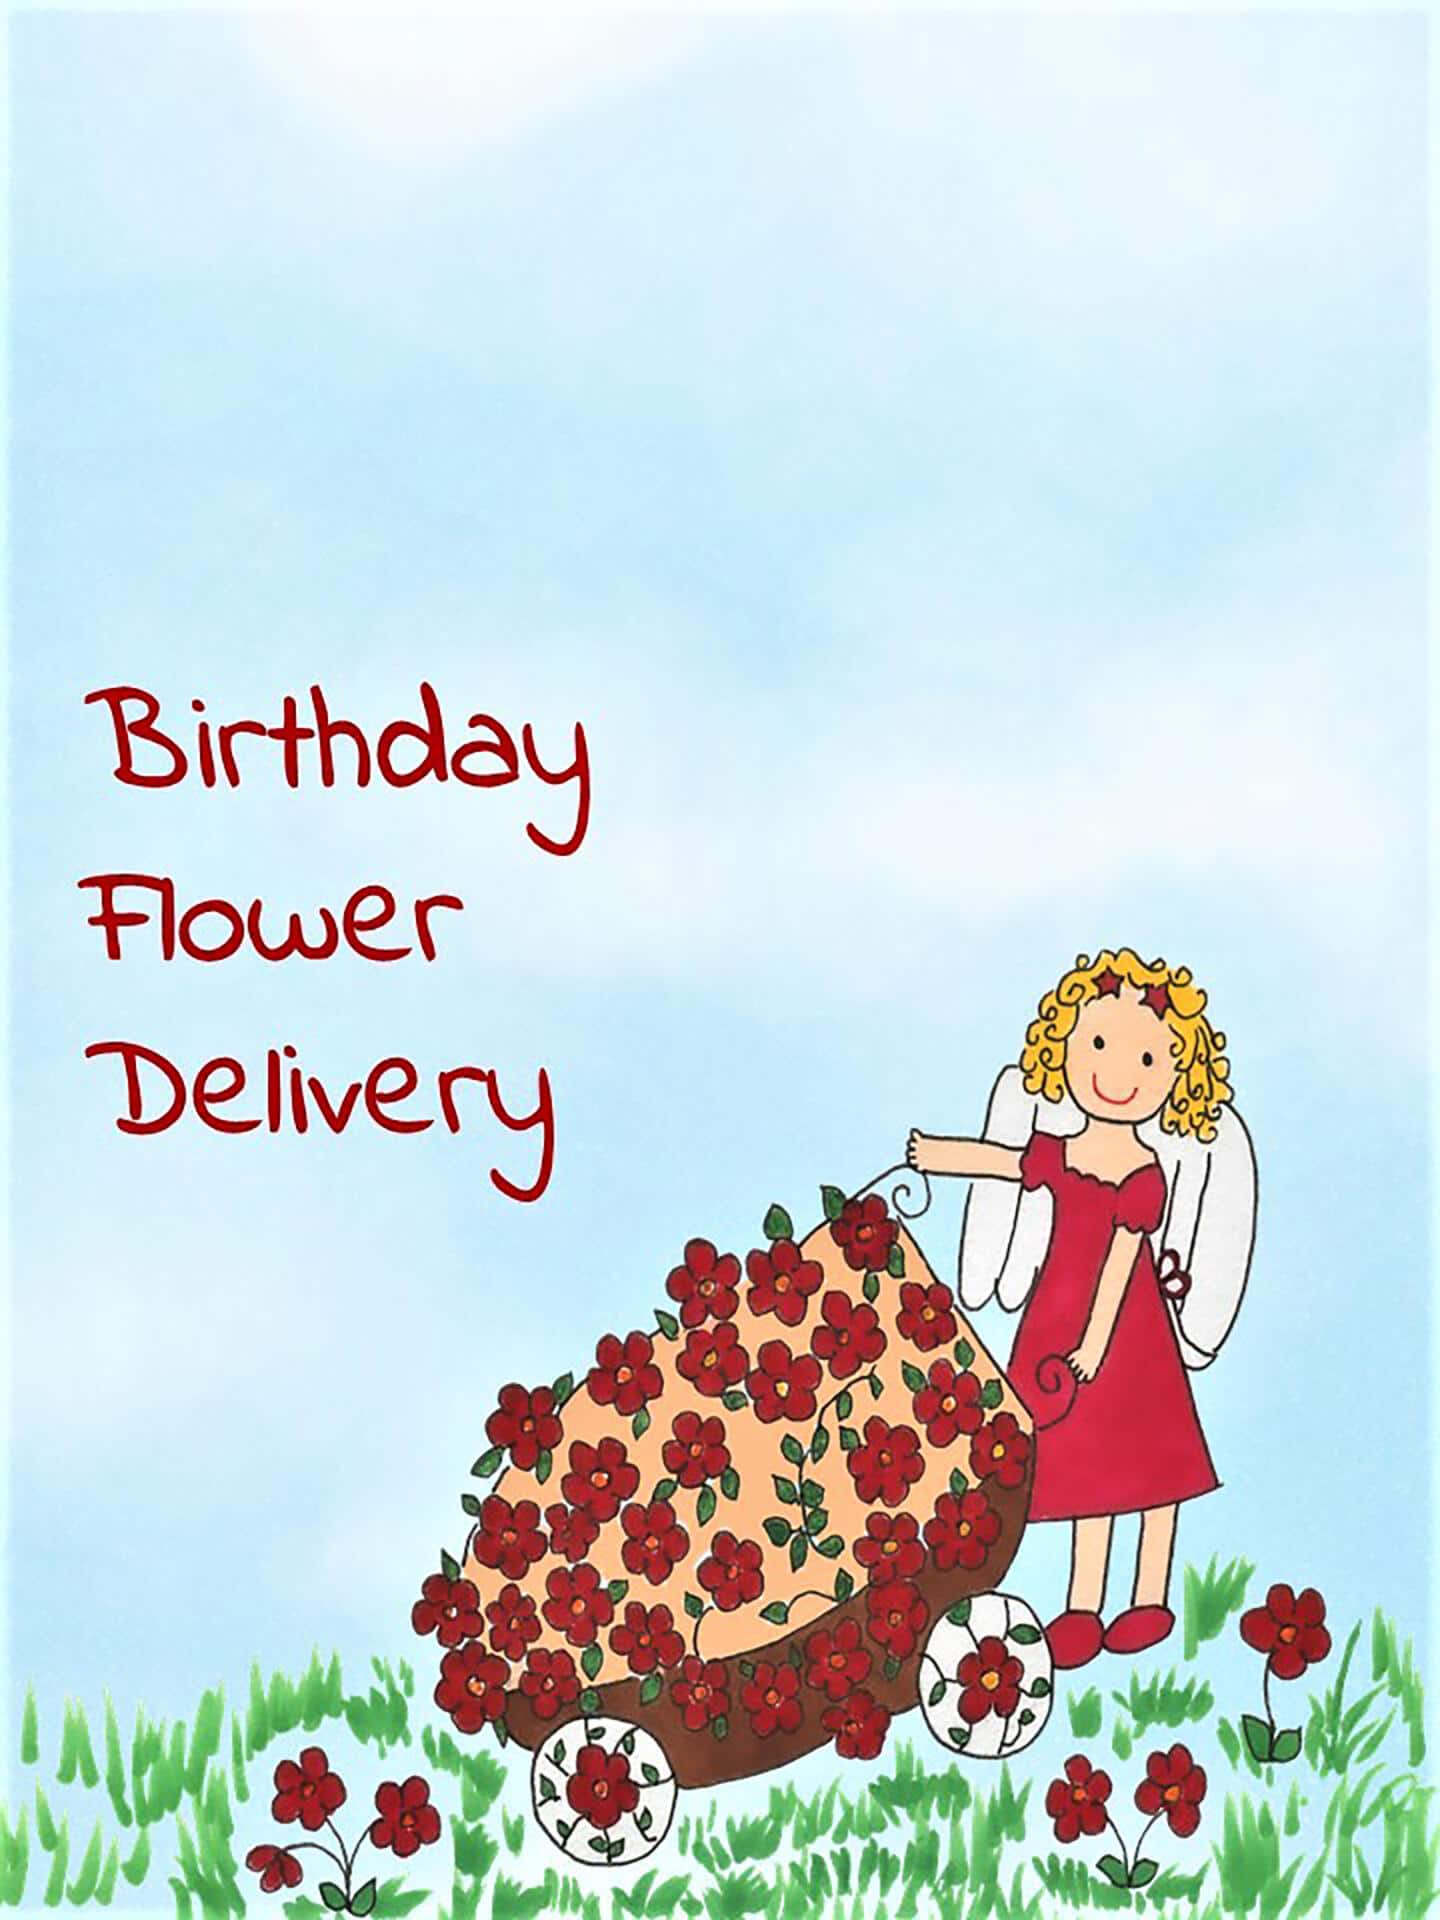 Birthday Flower Delivery eCard